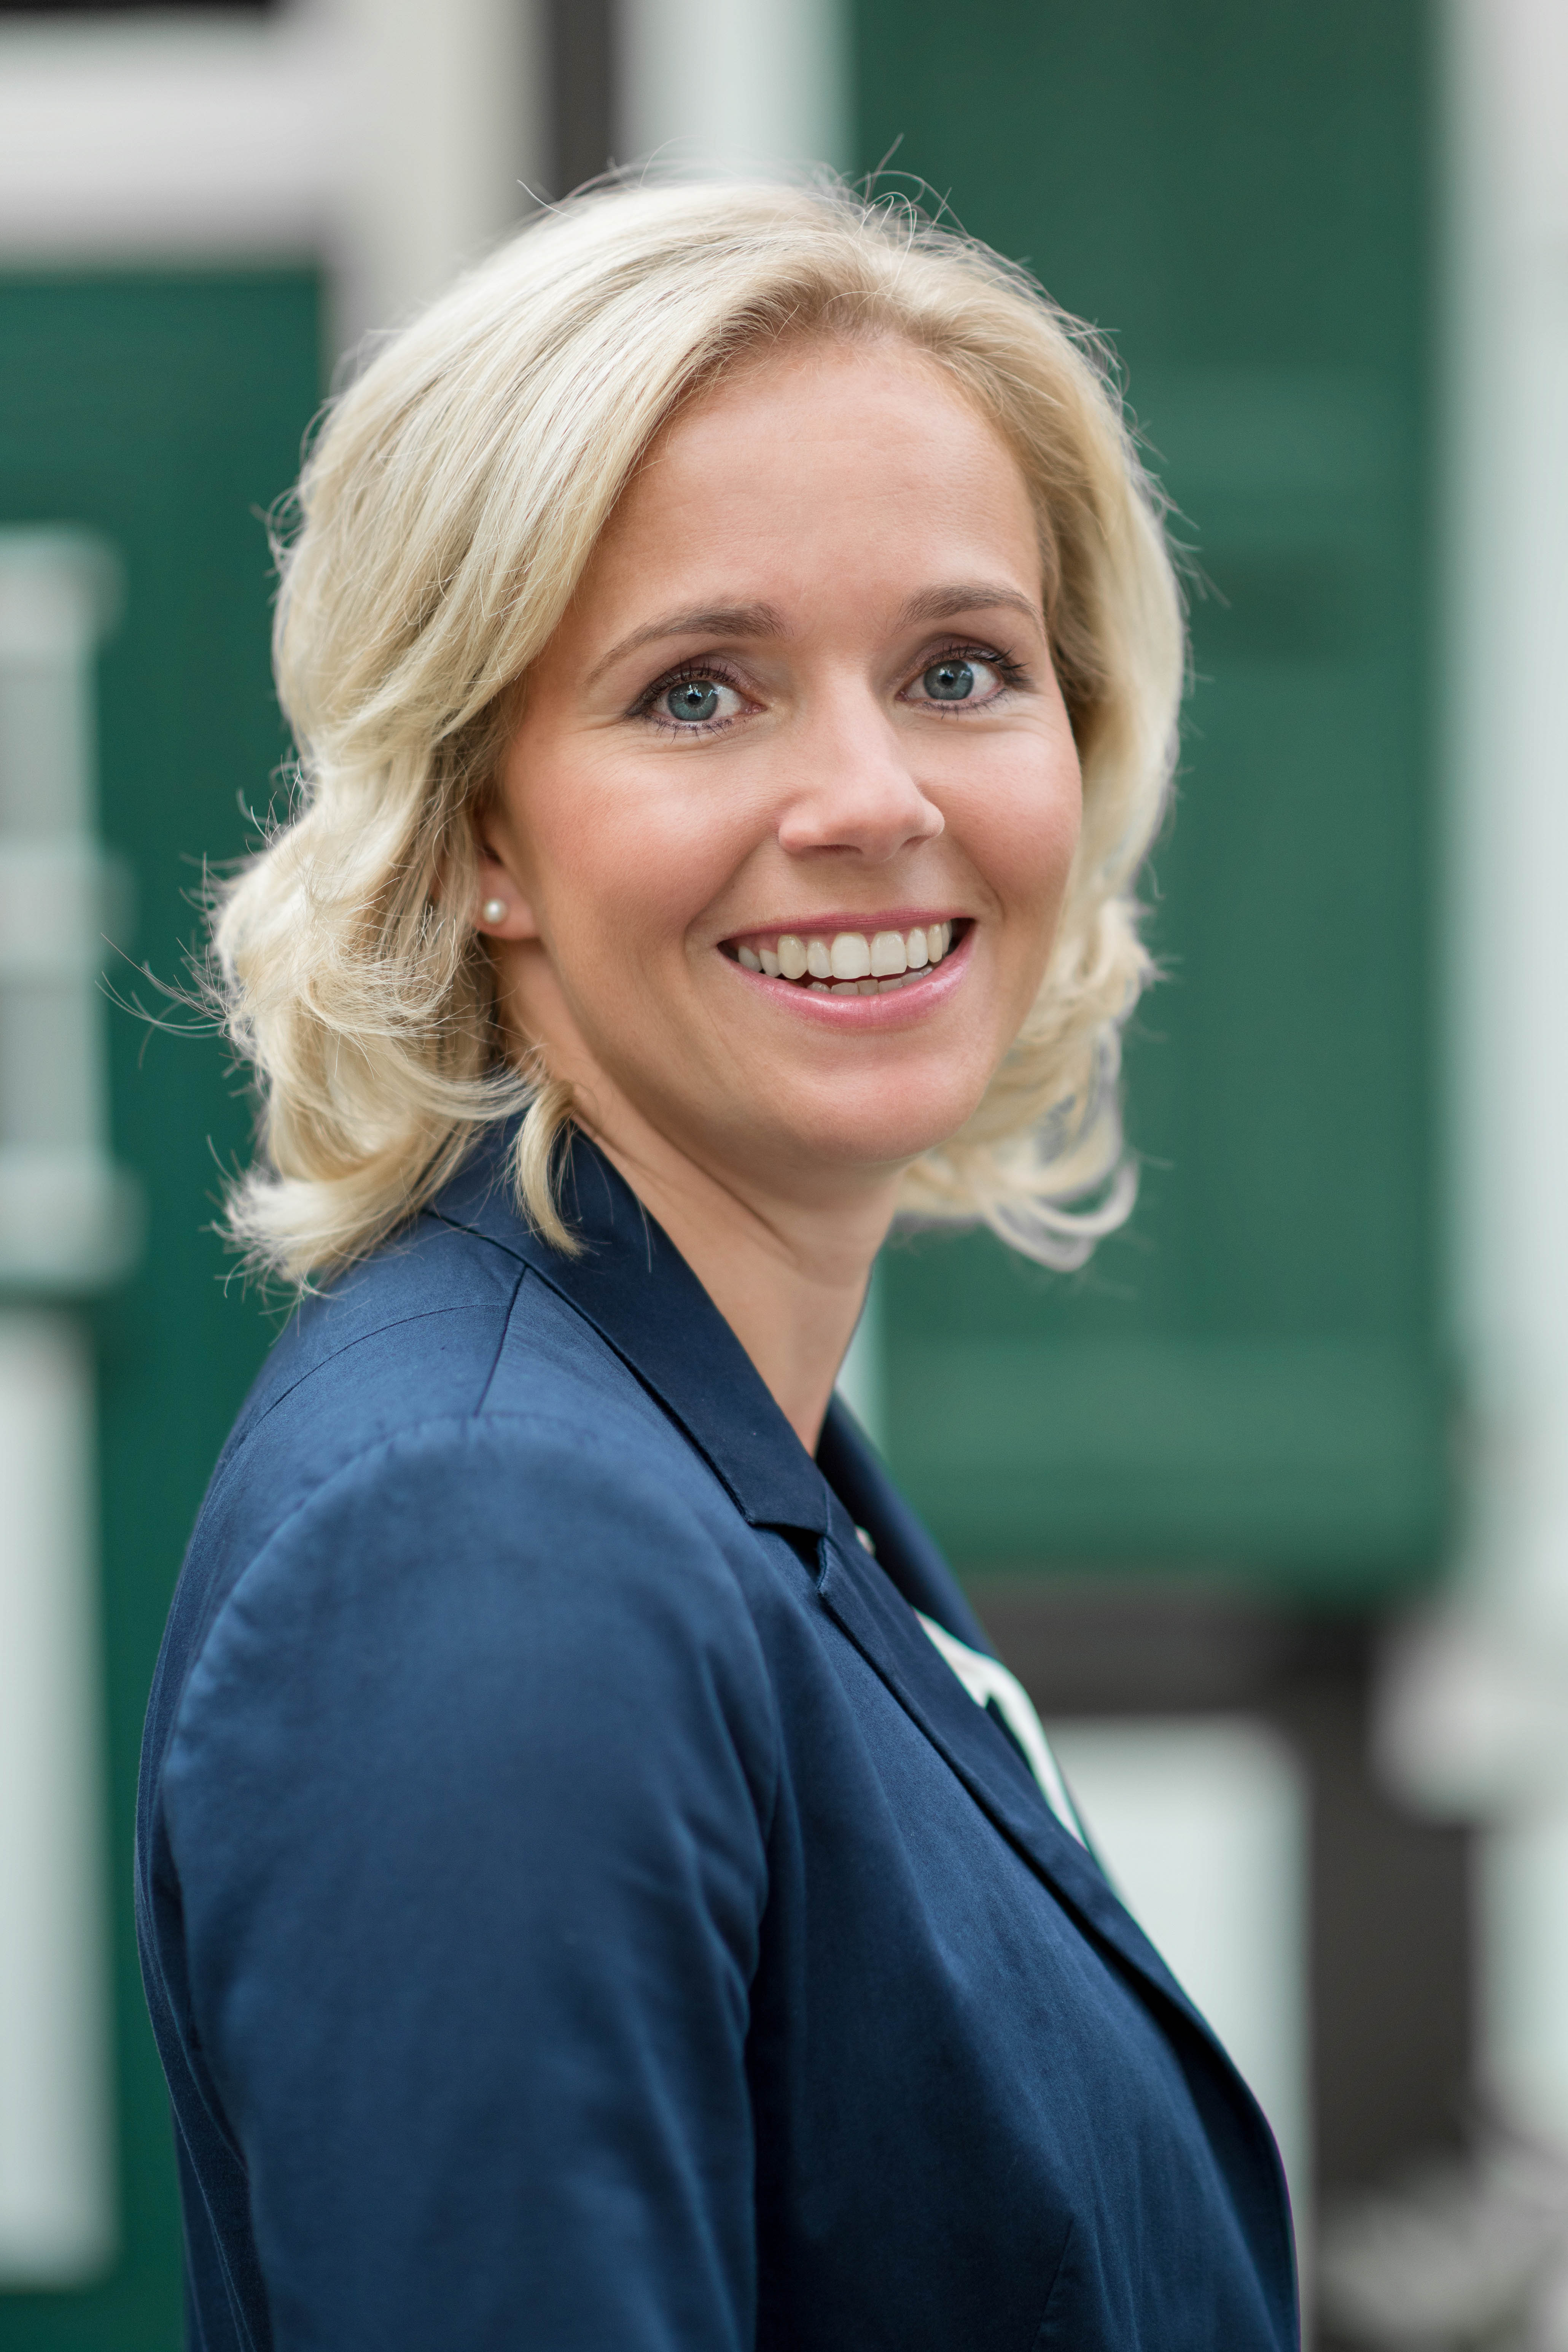 Kommunalpolitikerinnen im Fokus - Christina Rählmann